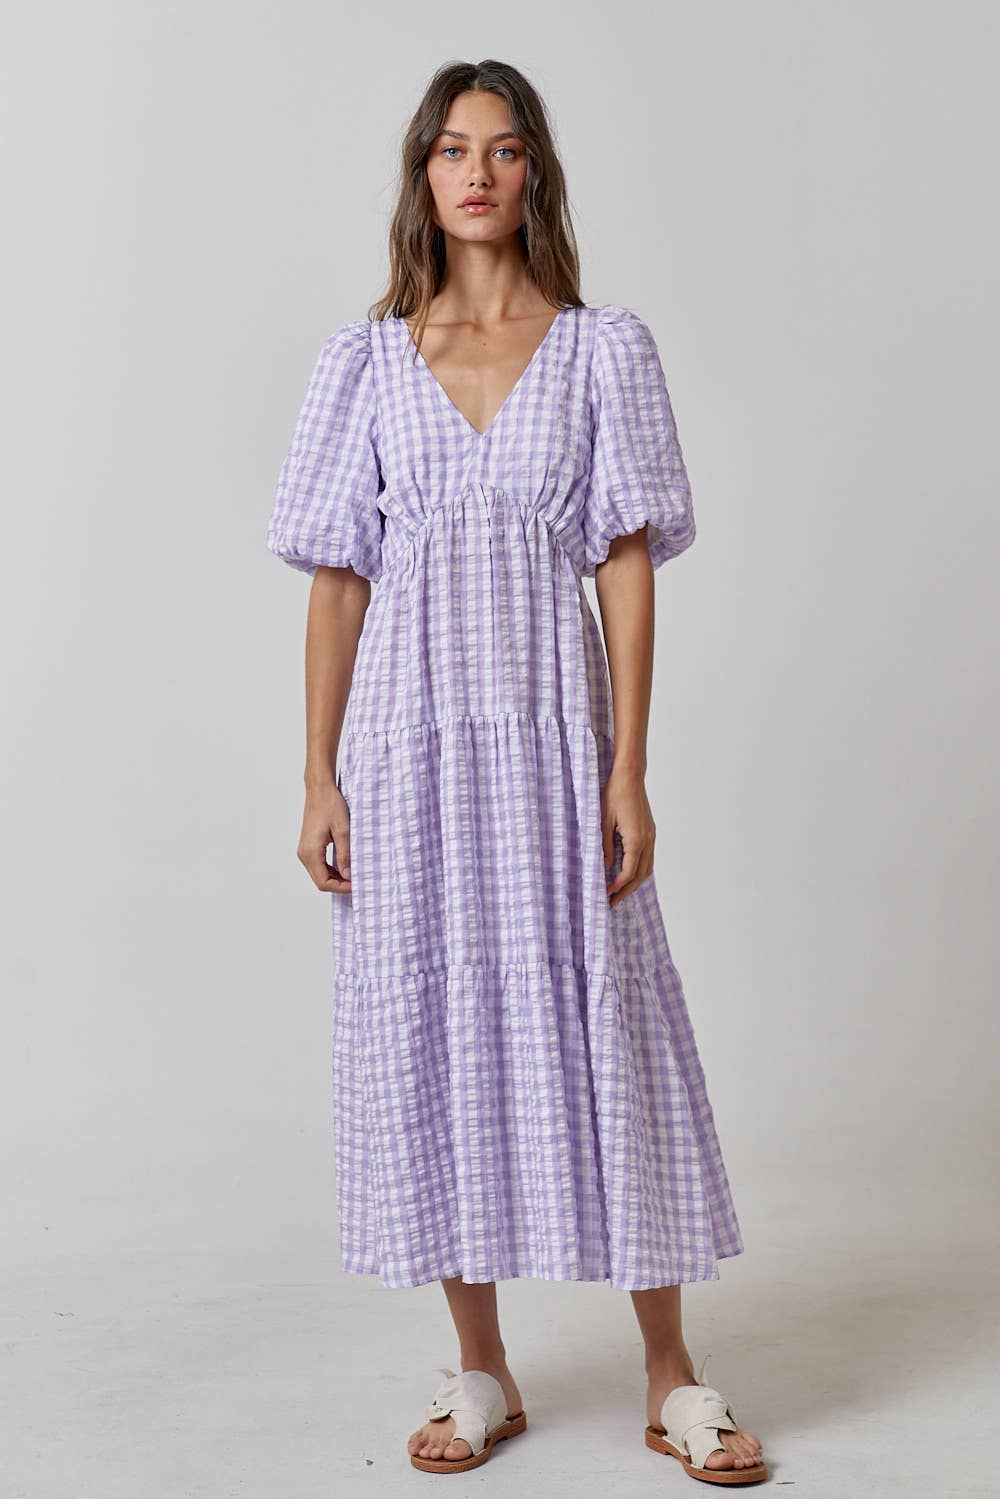 Vanessa Puff Sleeve Jacquard Dress - Adorn Boutique